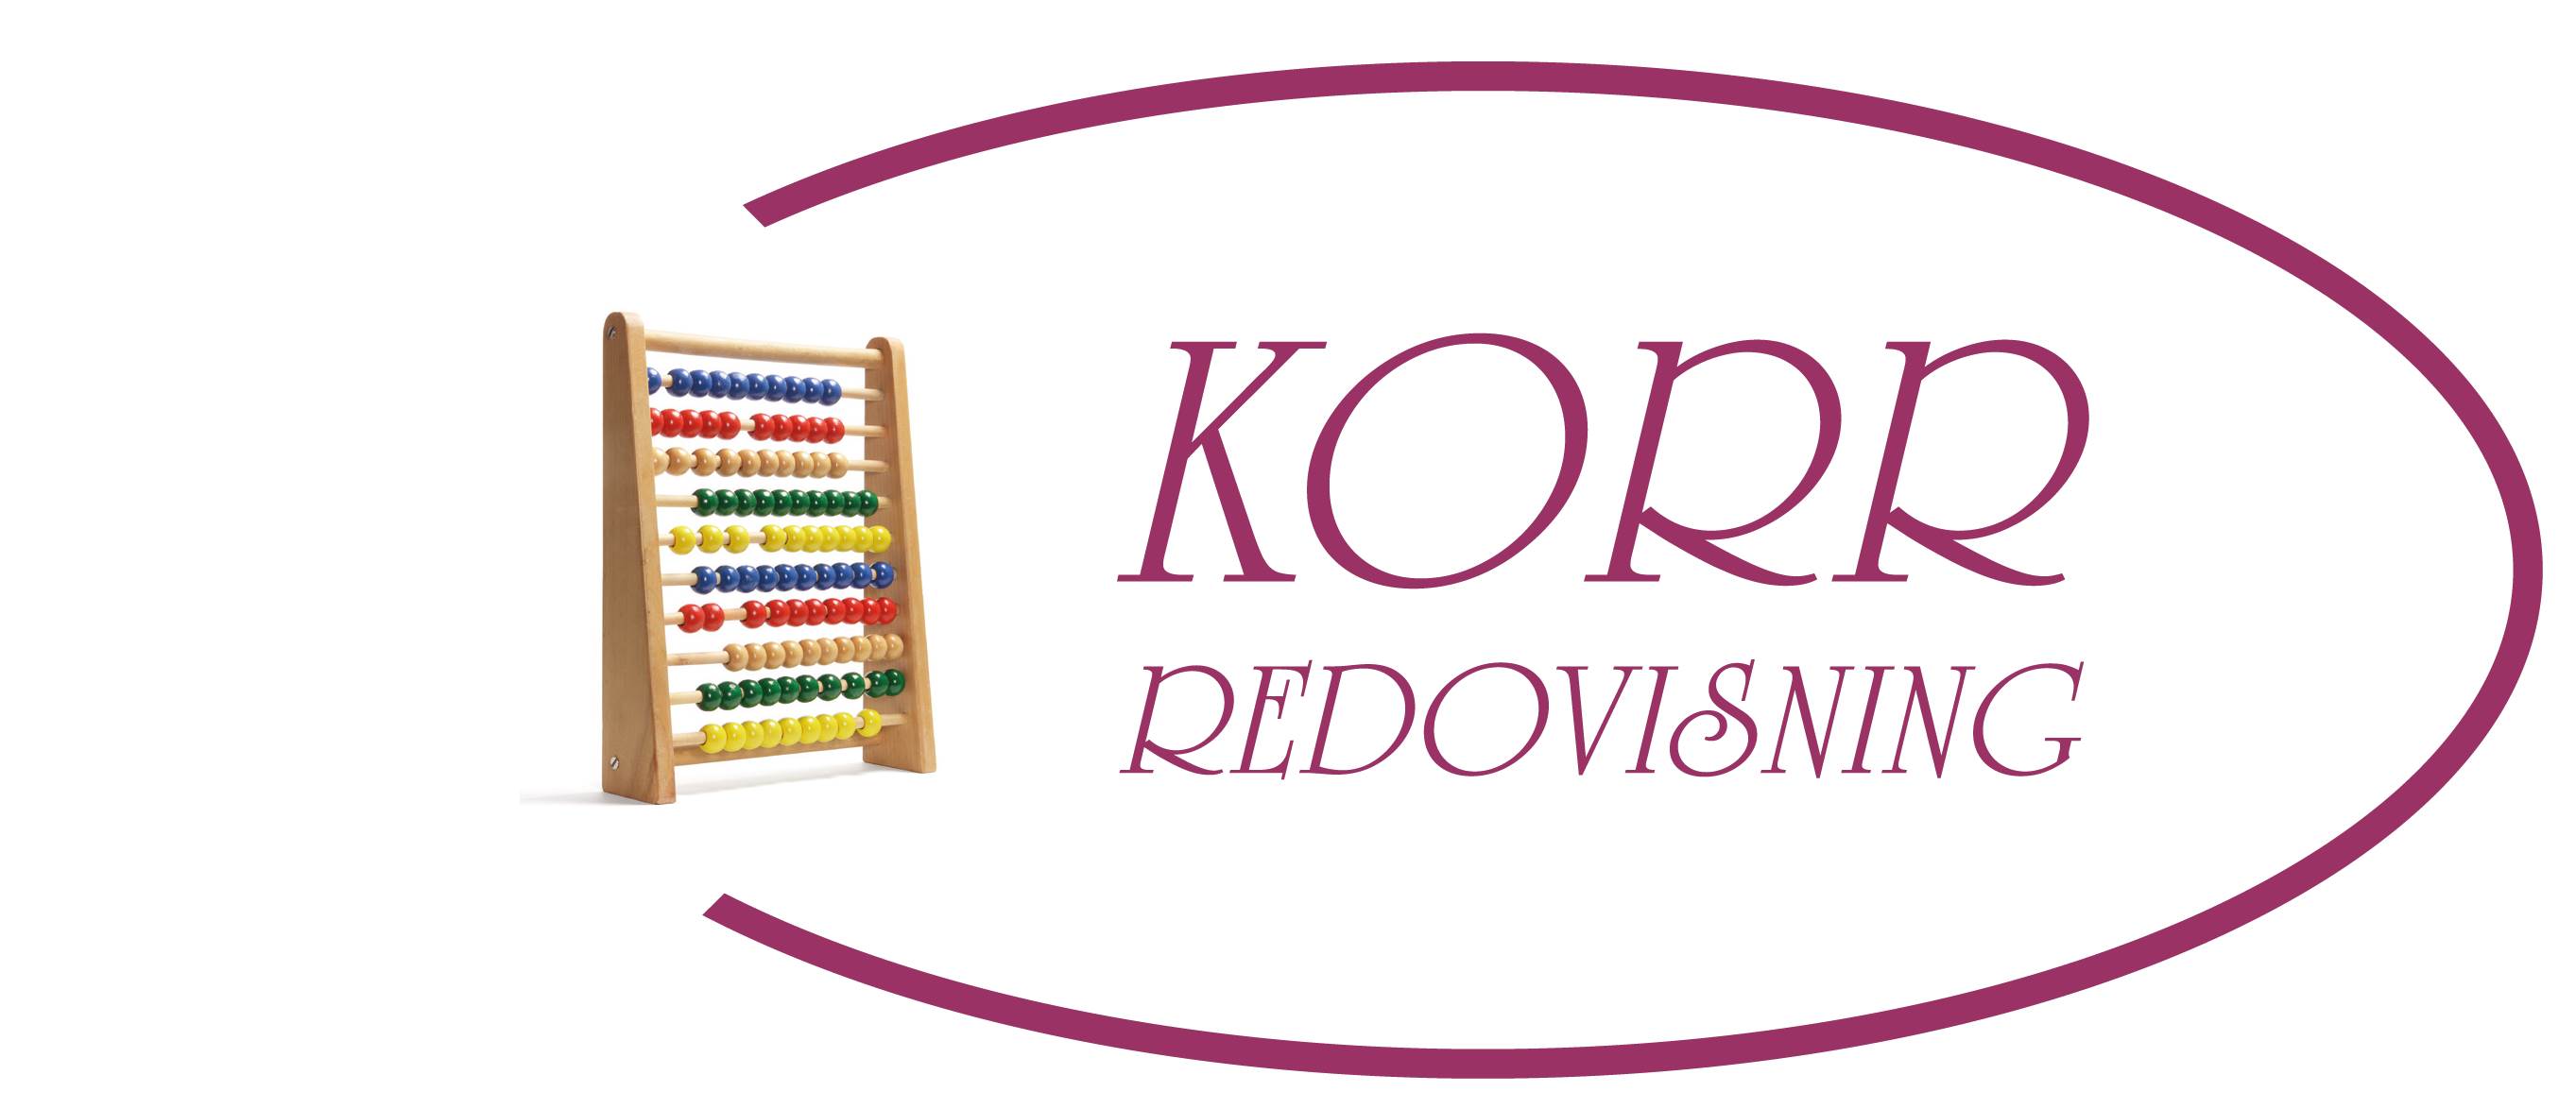 KORR_Redovisning_logo.png